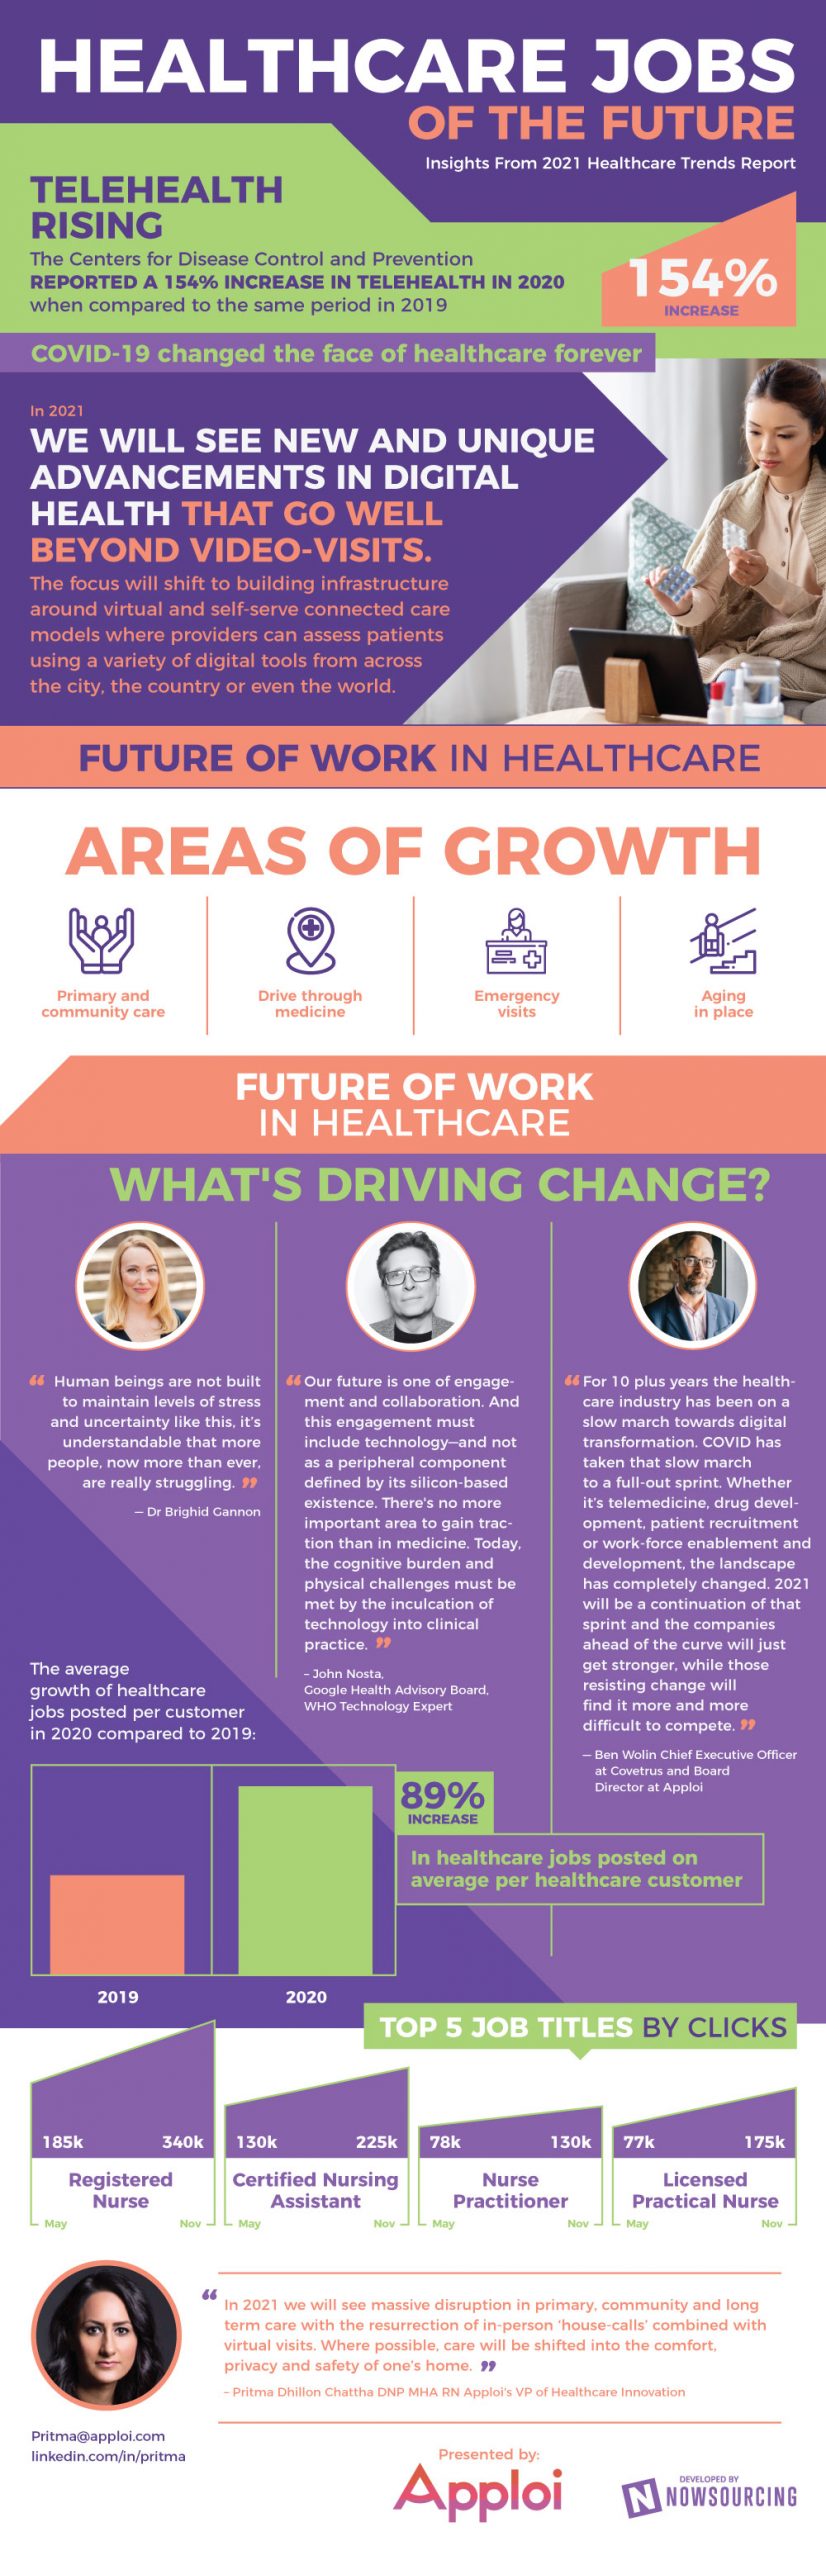 Healthcare Job Trends of the Future